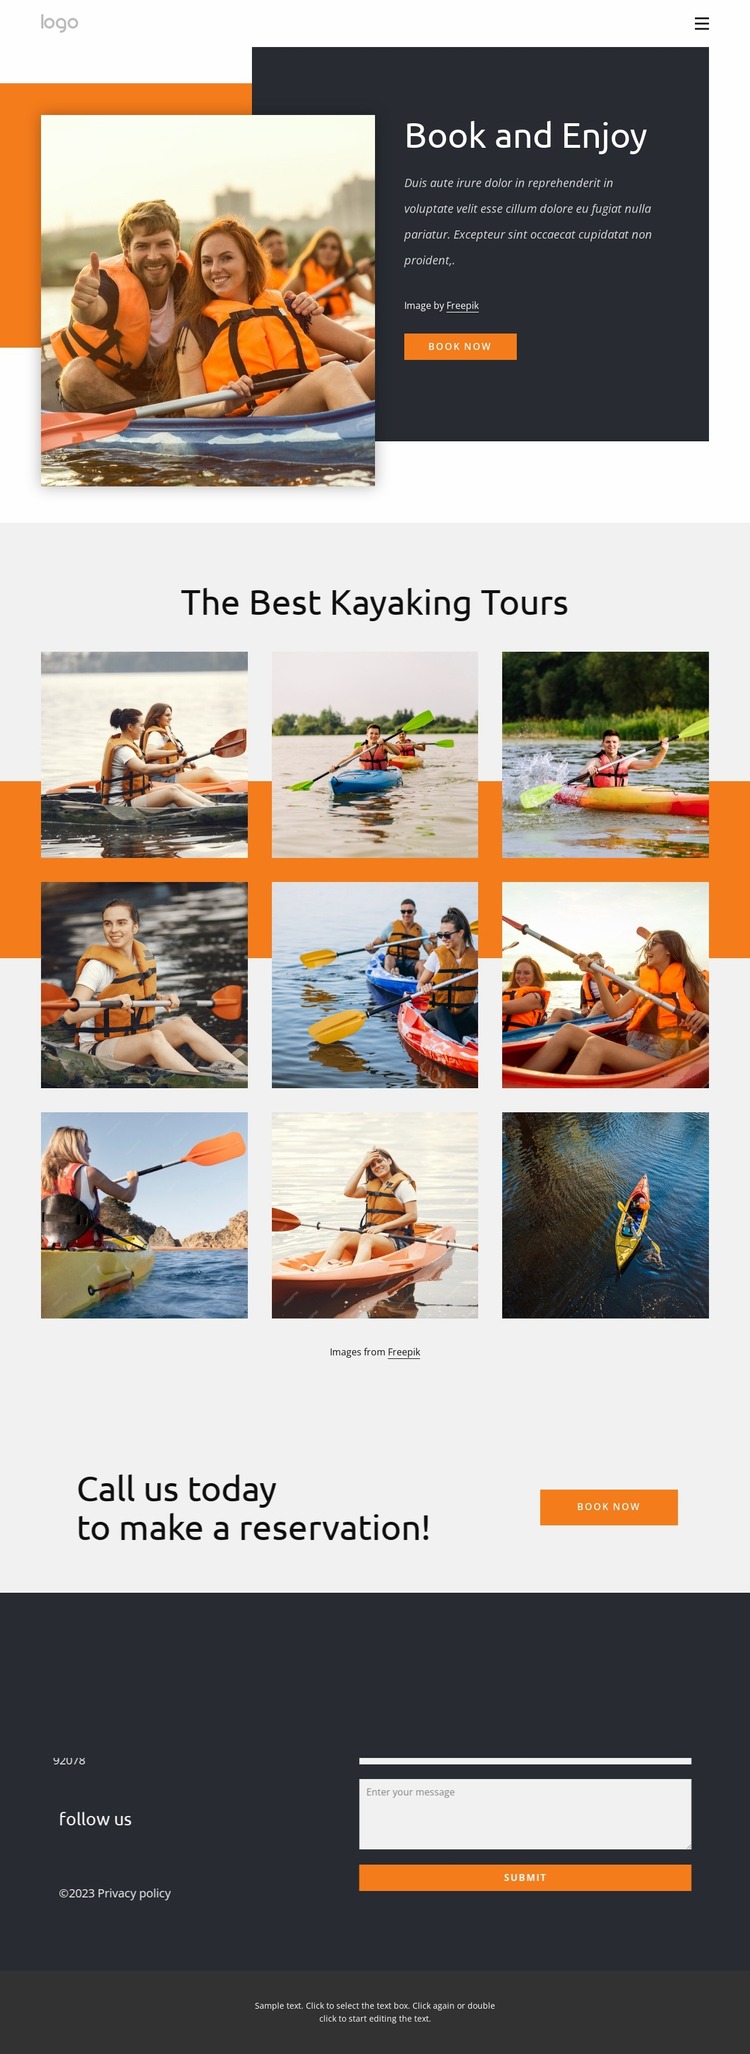 Kayaking tours and holidays Website Mockup